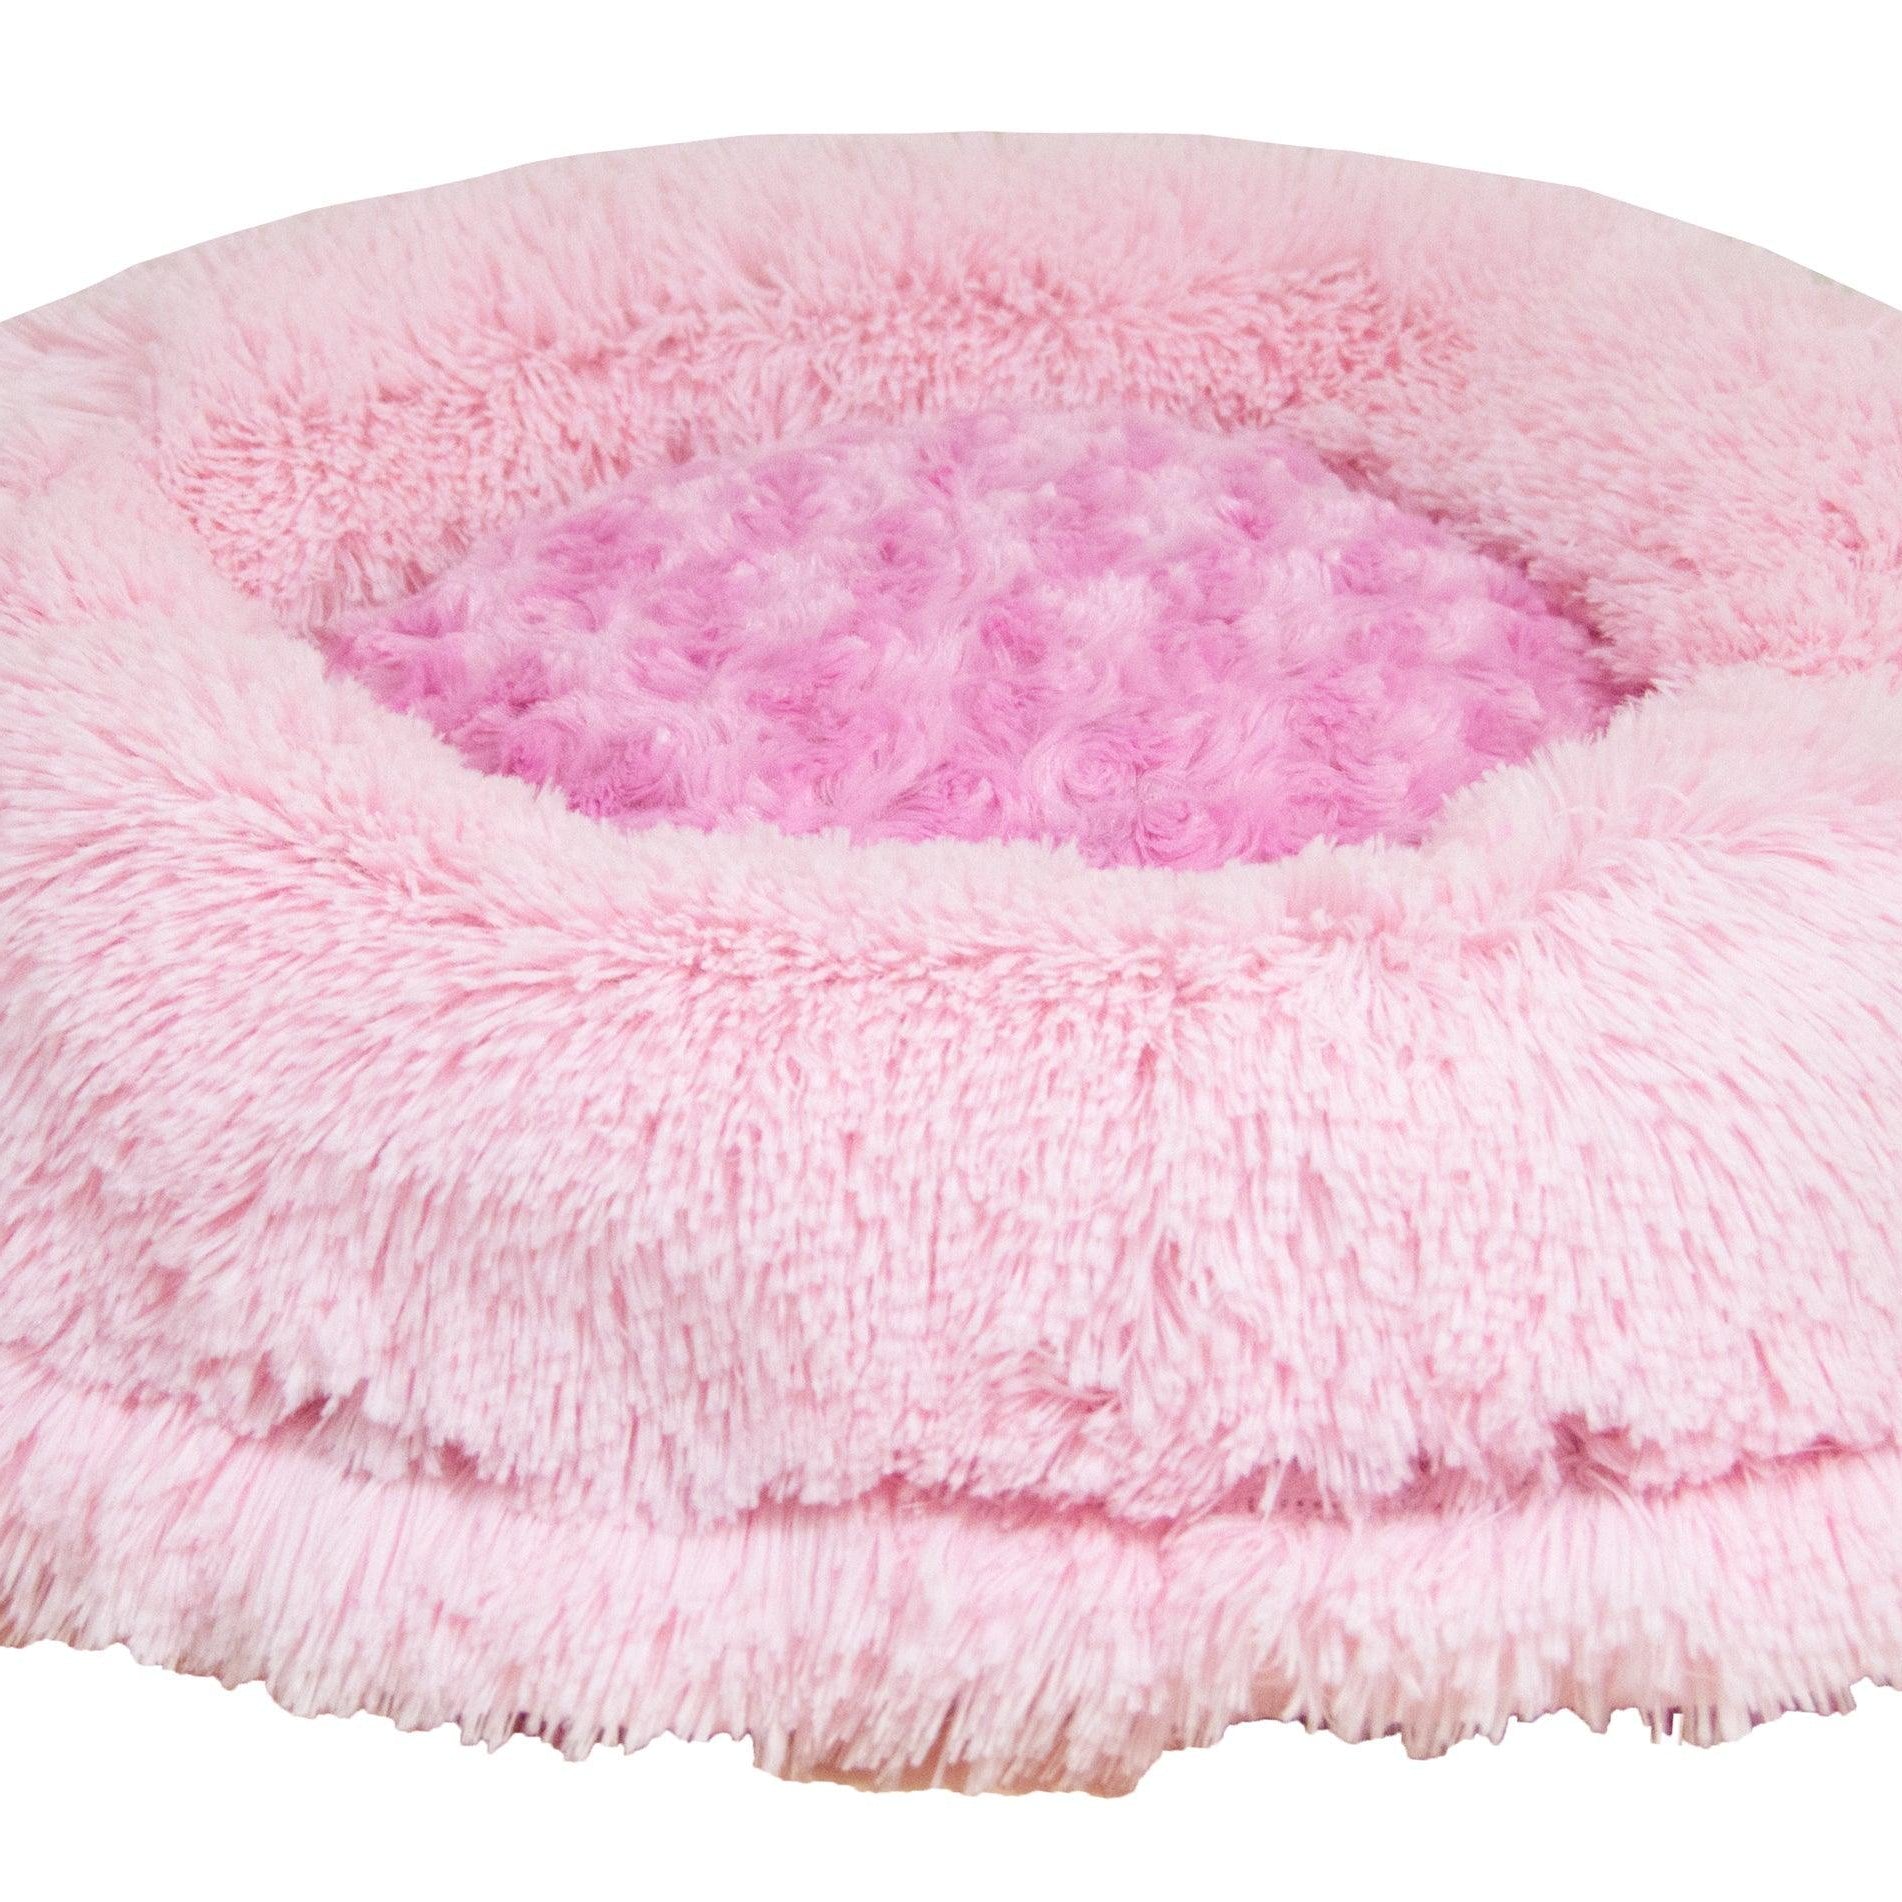 Lily Pod - Bubble Gum and Lollipop with Cotton Candy Patch - Rocky & Maggie's Pet Boutique and Salon